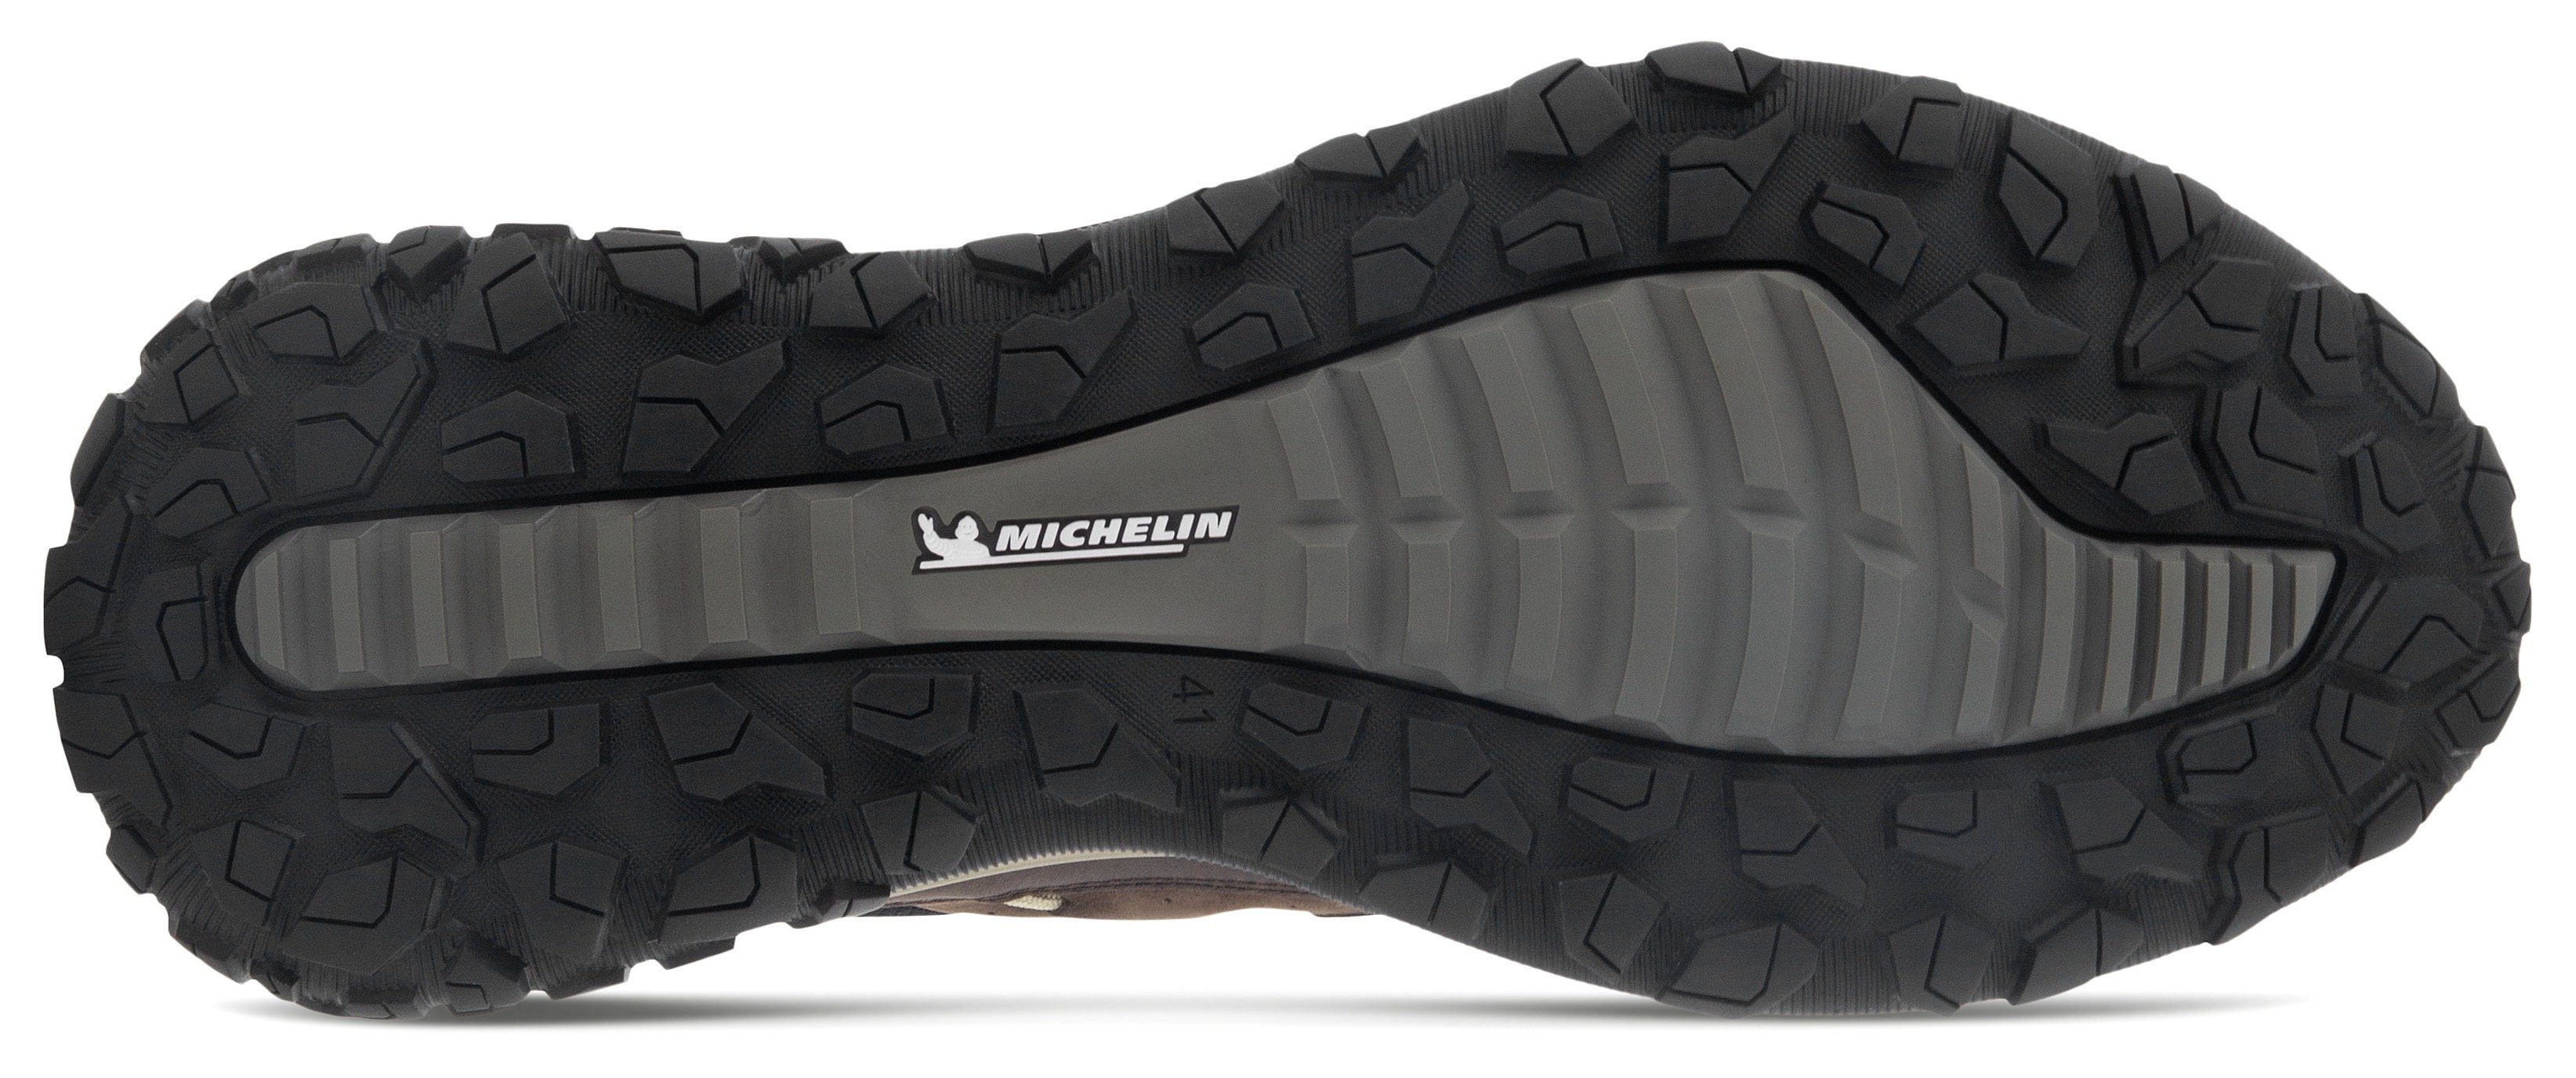 Ecco dunkelbraun Sneaker ULT-TRN Michelin-Laufsohle mit M profilierter